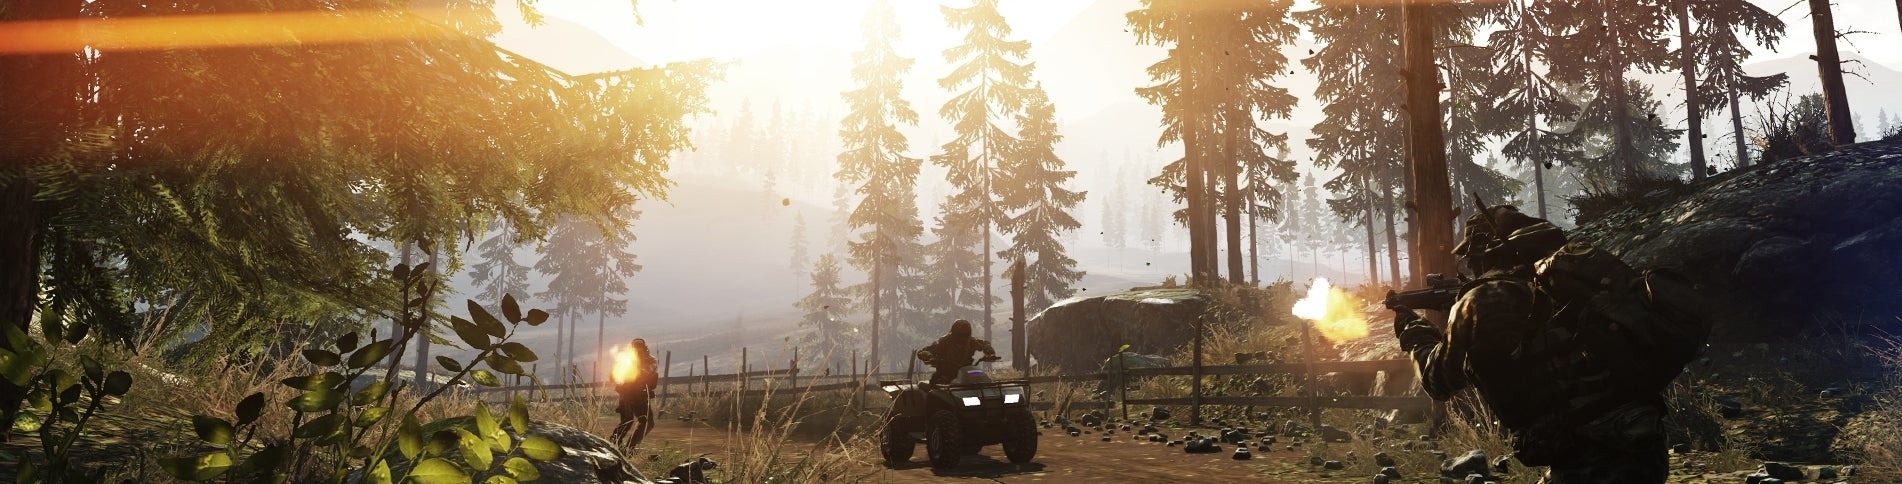 Image for RECENZE multiplayeru Battlefield 4 PC